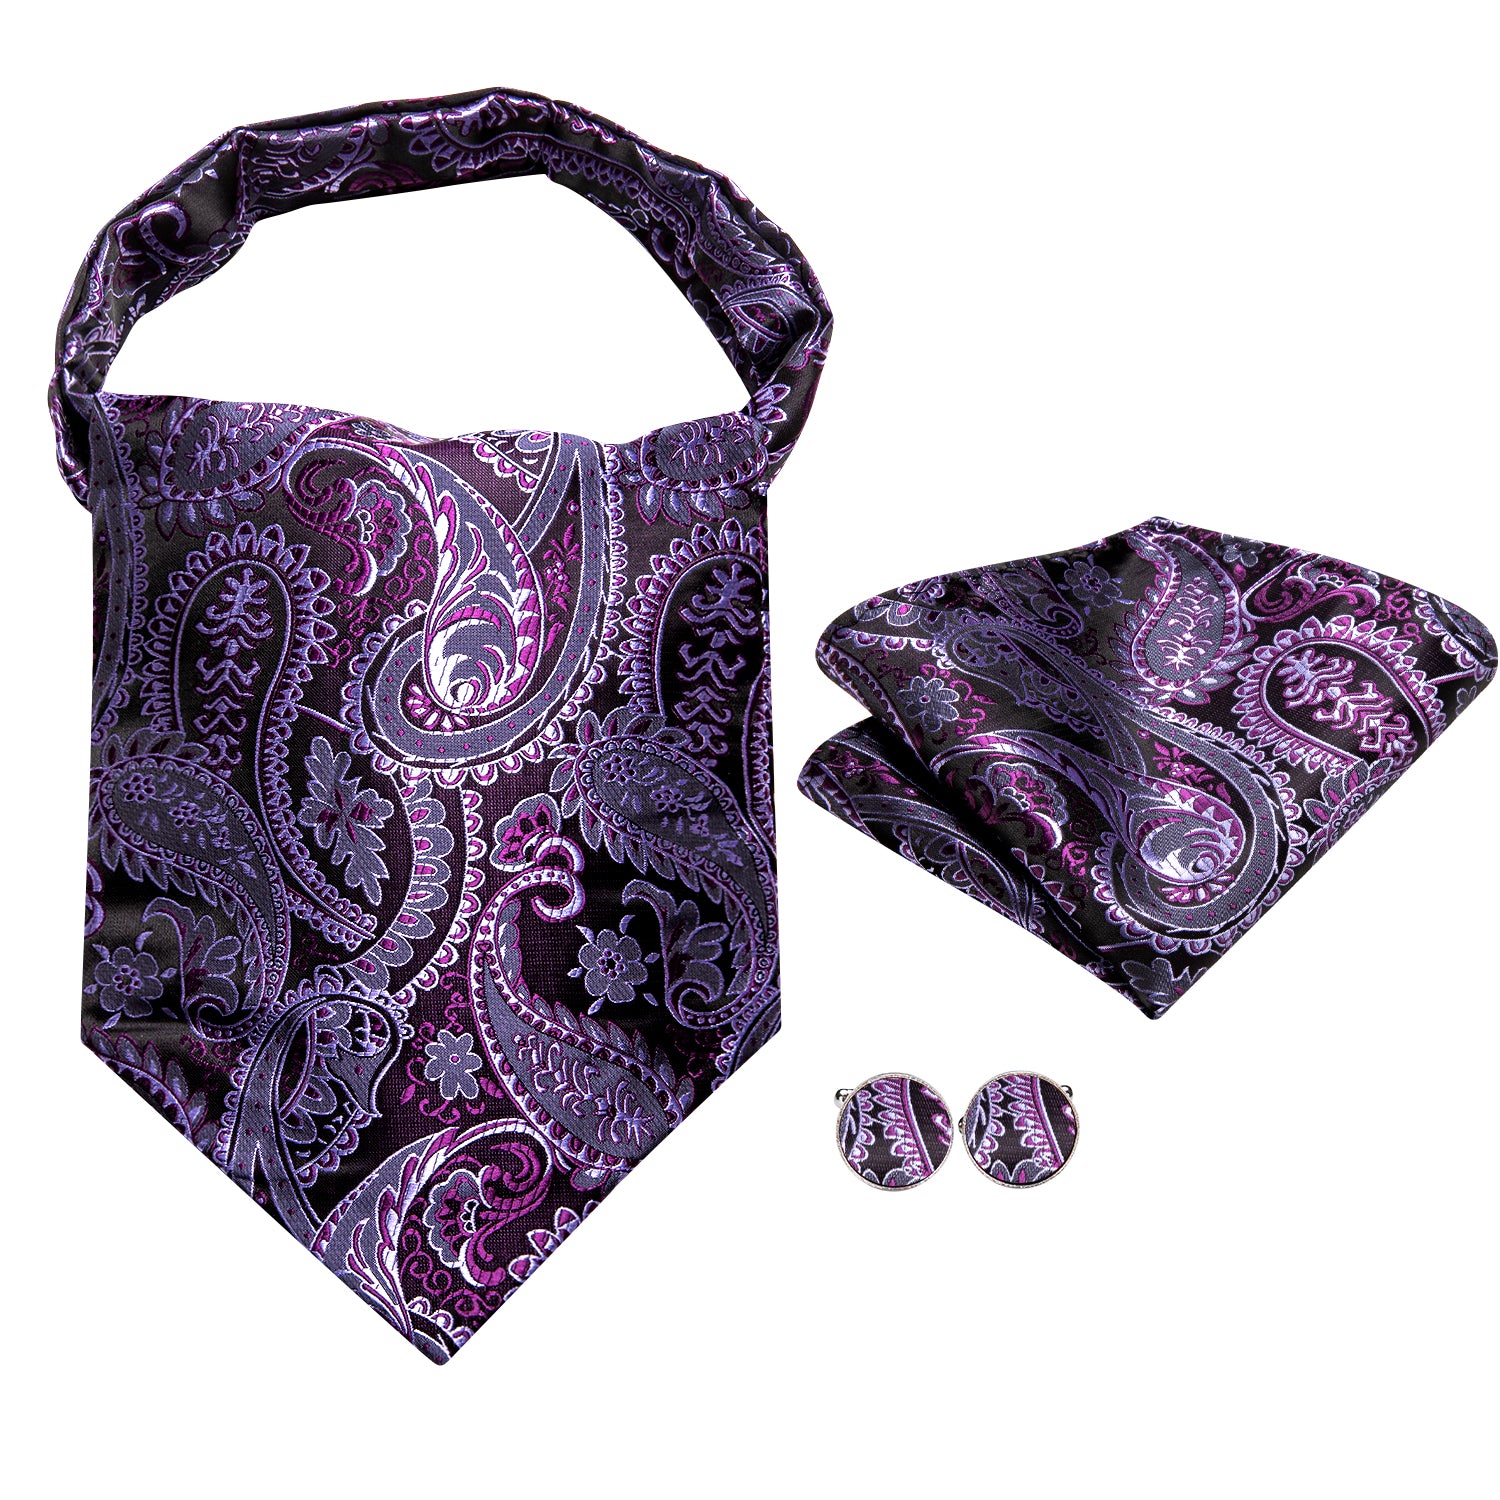 Purple Paisley Silk Ascot Tie Pocket Square Cufflinks Set  for Men